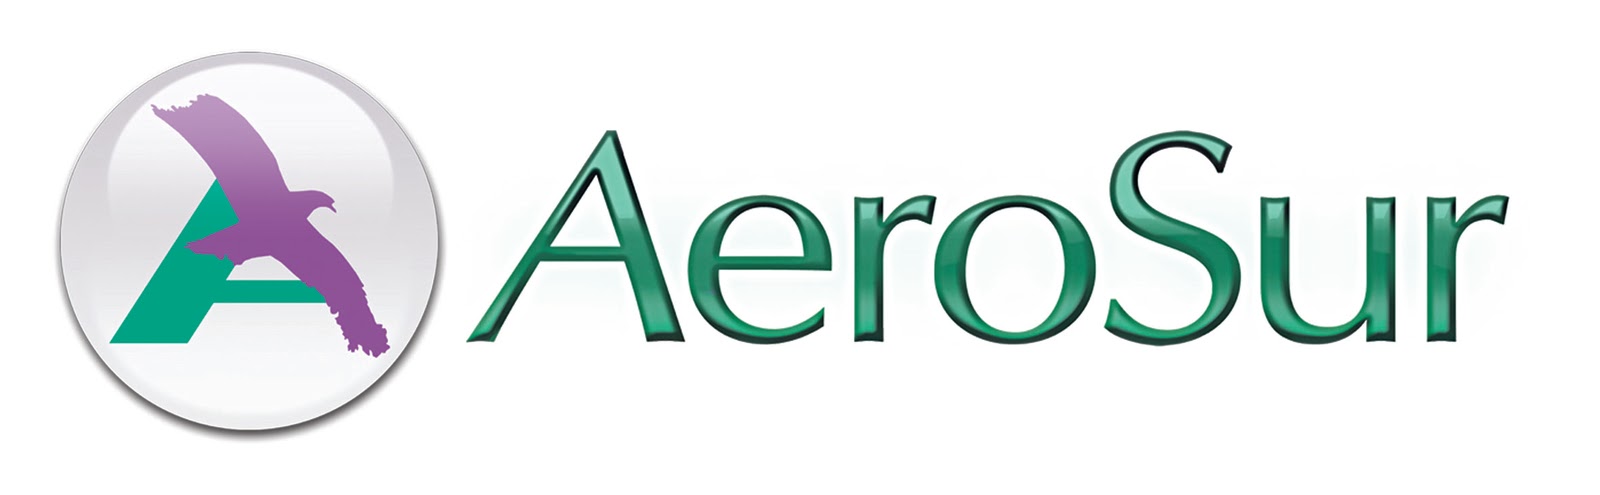 AeroSur Logo photo - 1